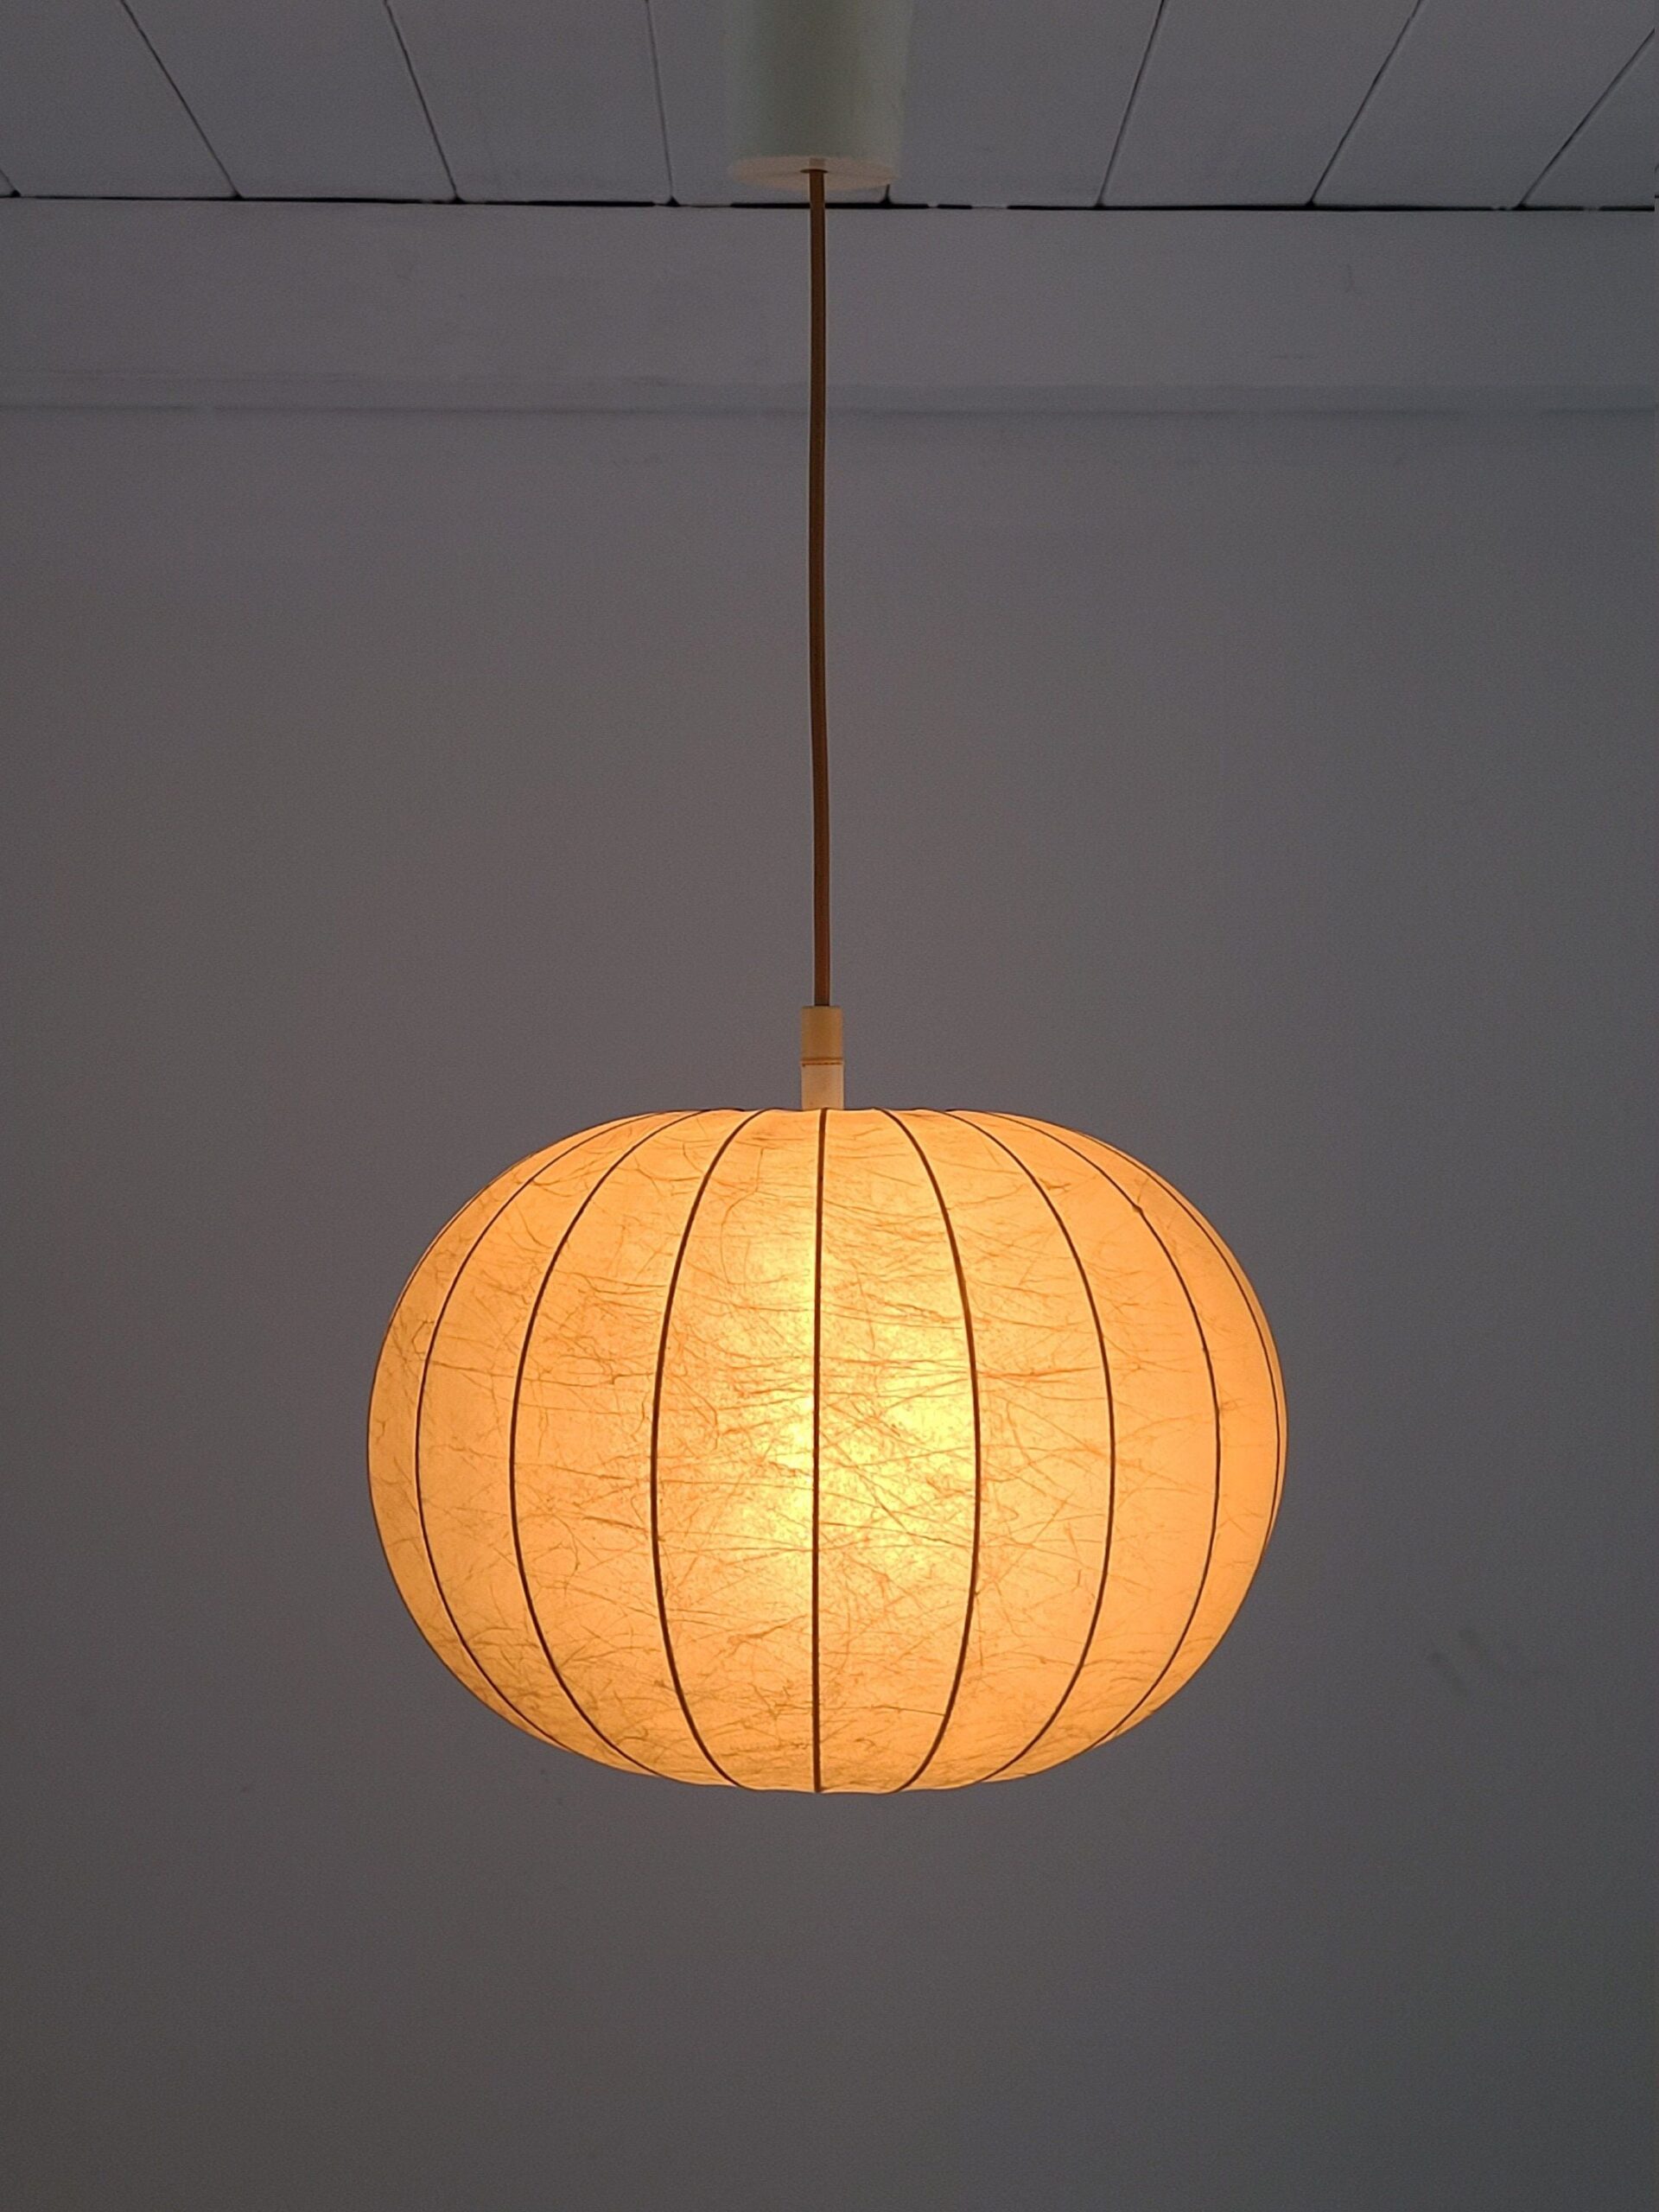 Hanging Chandelier Lamp Elegant Lighting Fixture Suspended from Ceiling